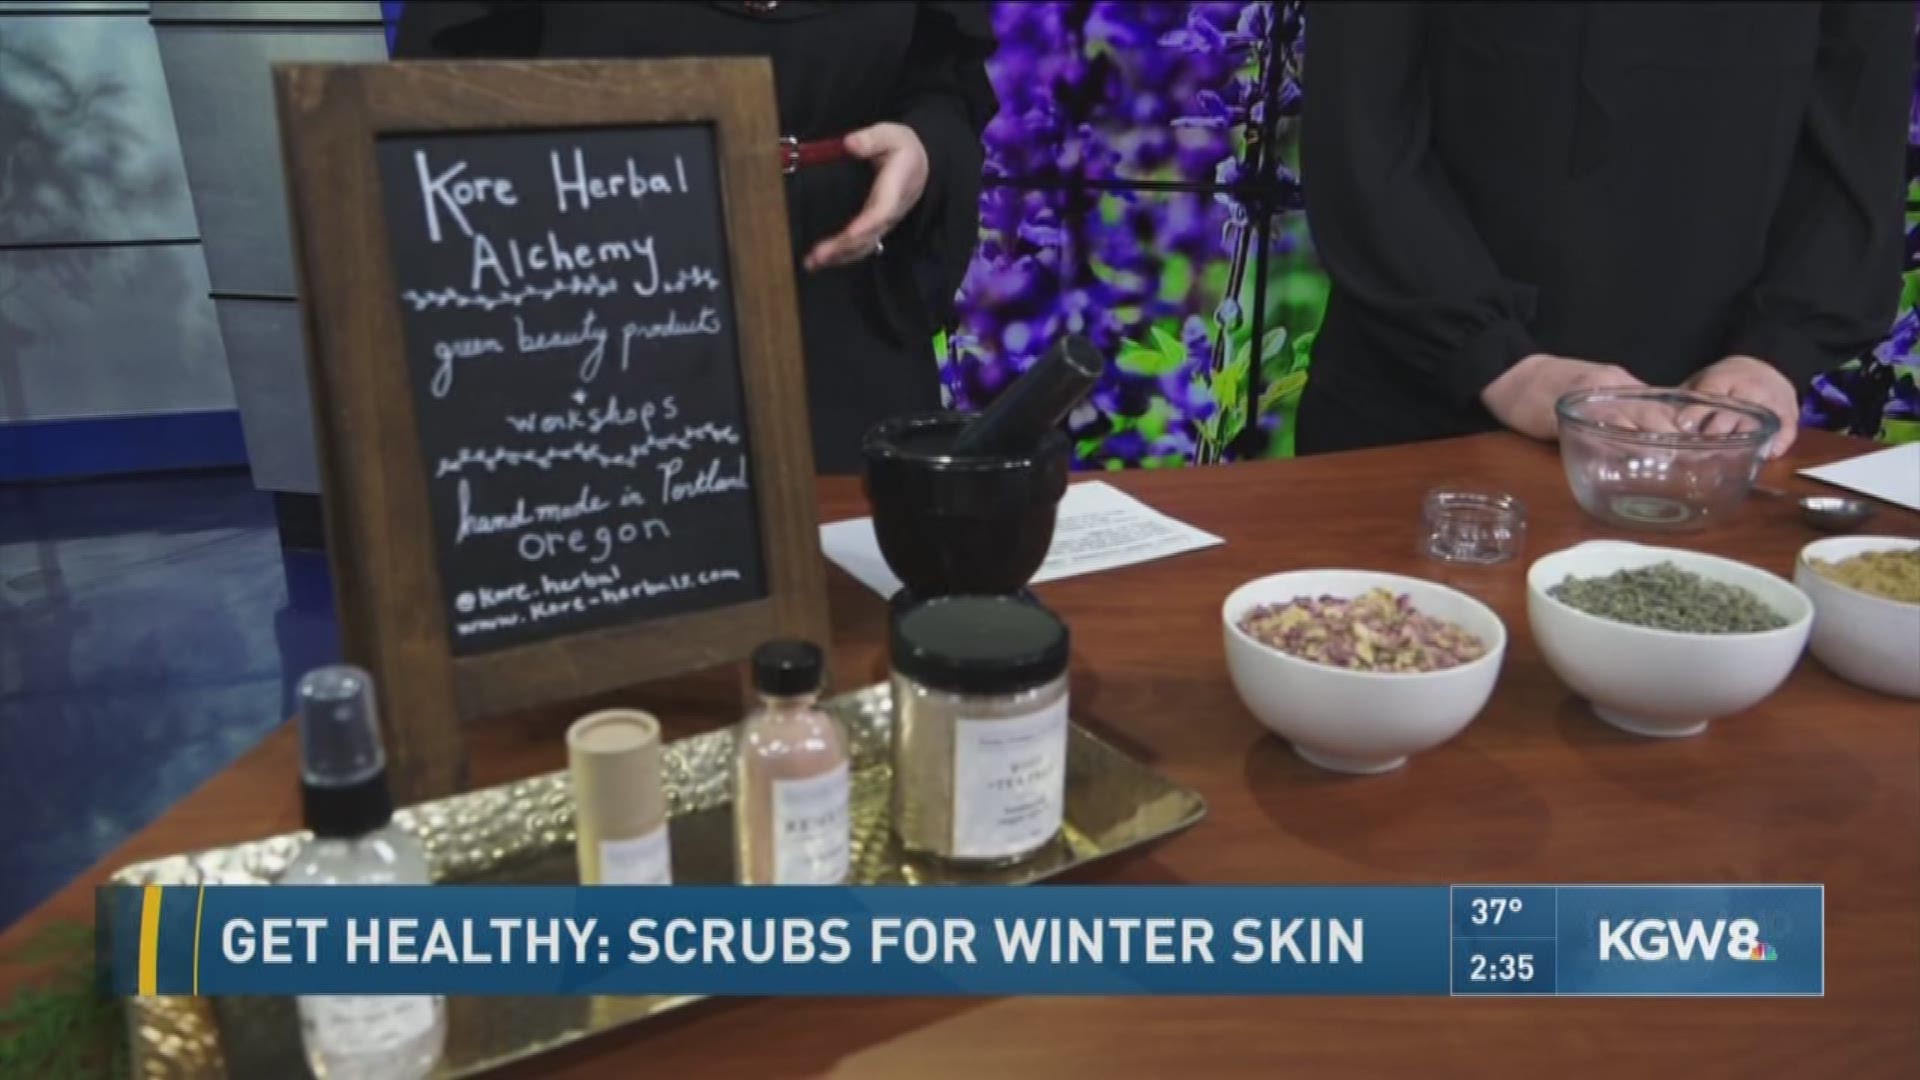 Get healthy: scrubs for winter skin